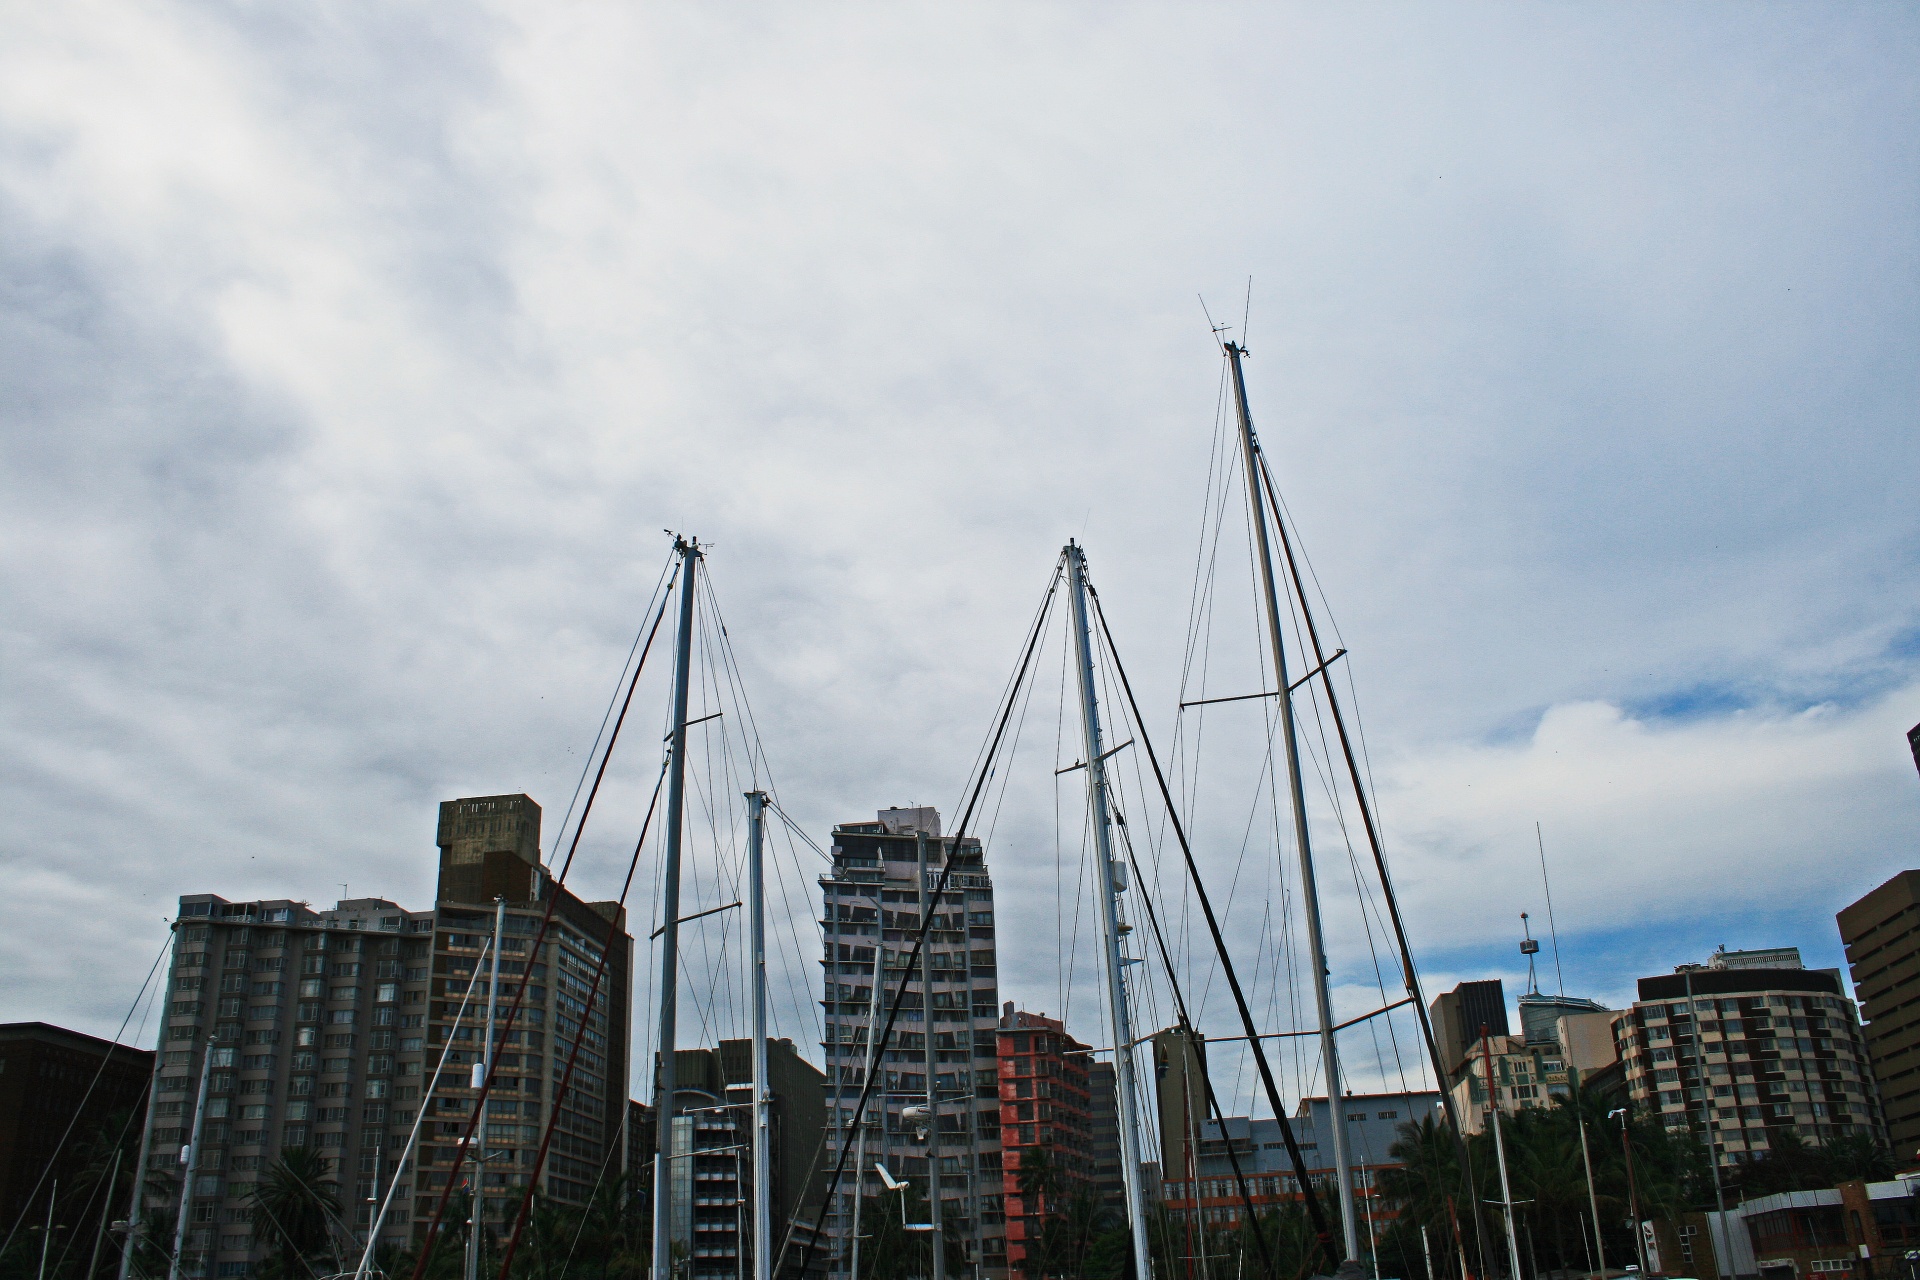 City Beyond Yacht Masts